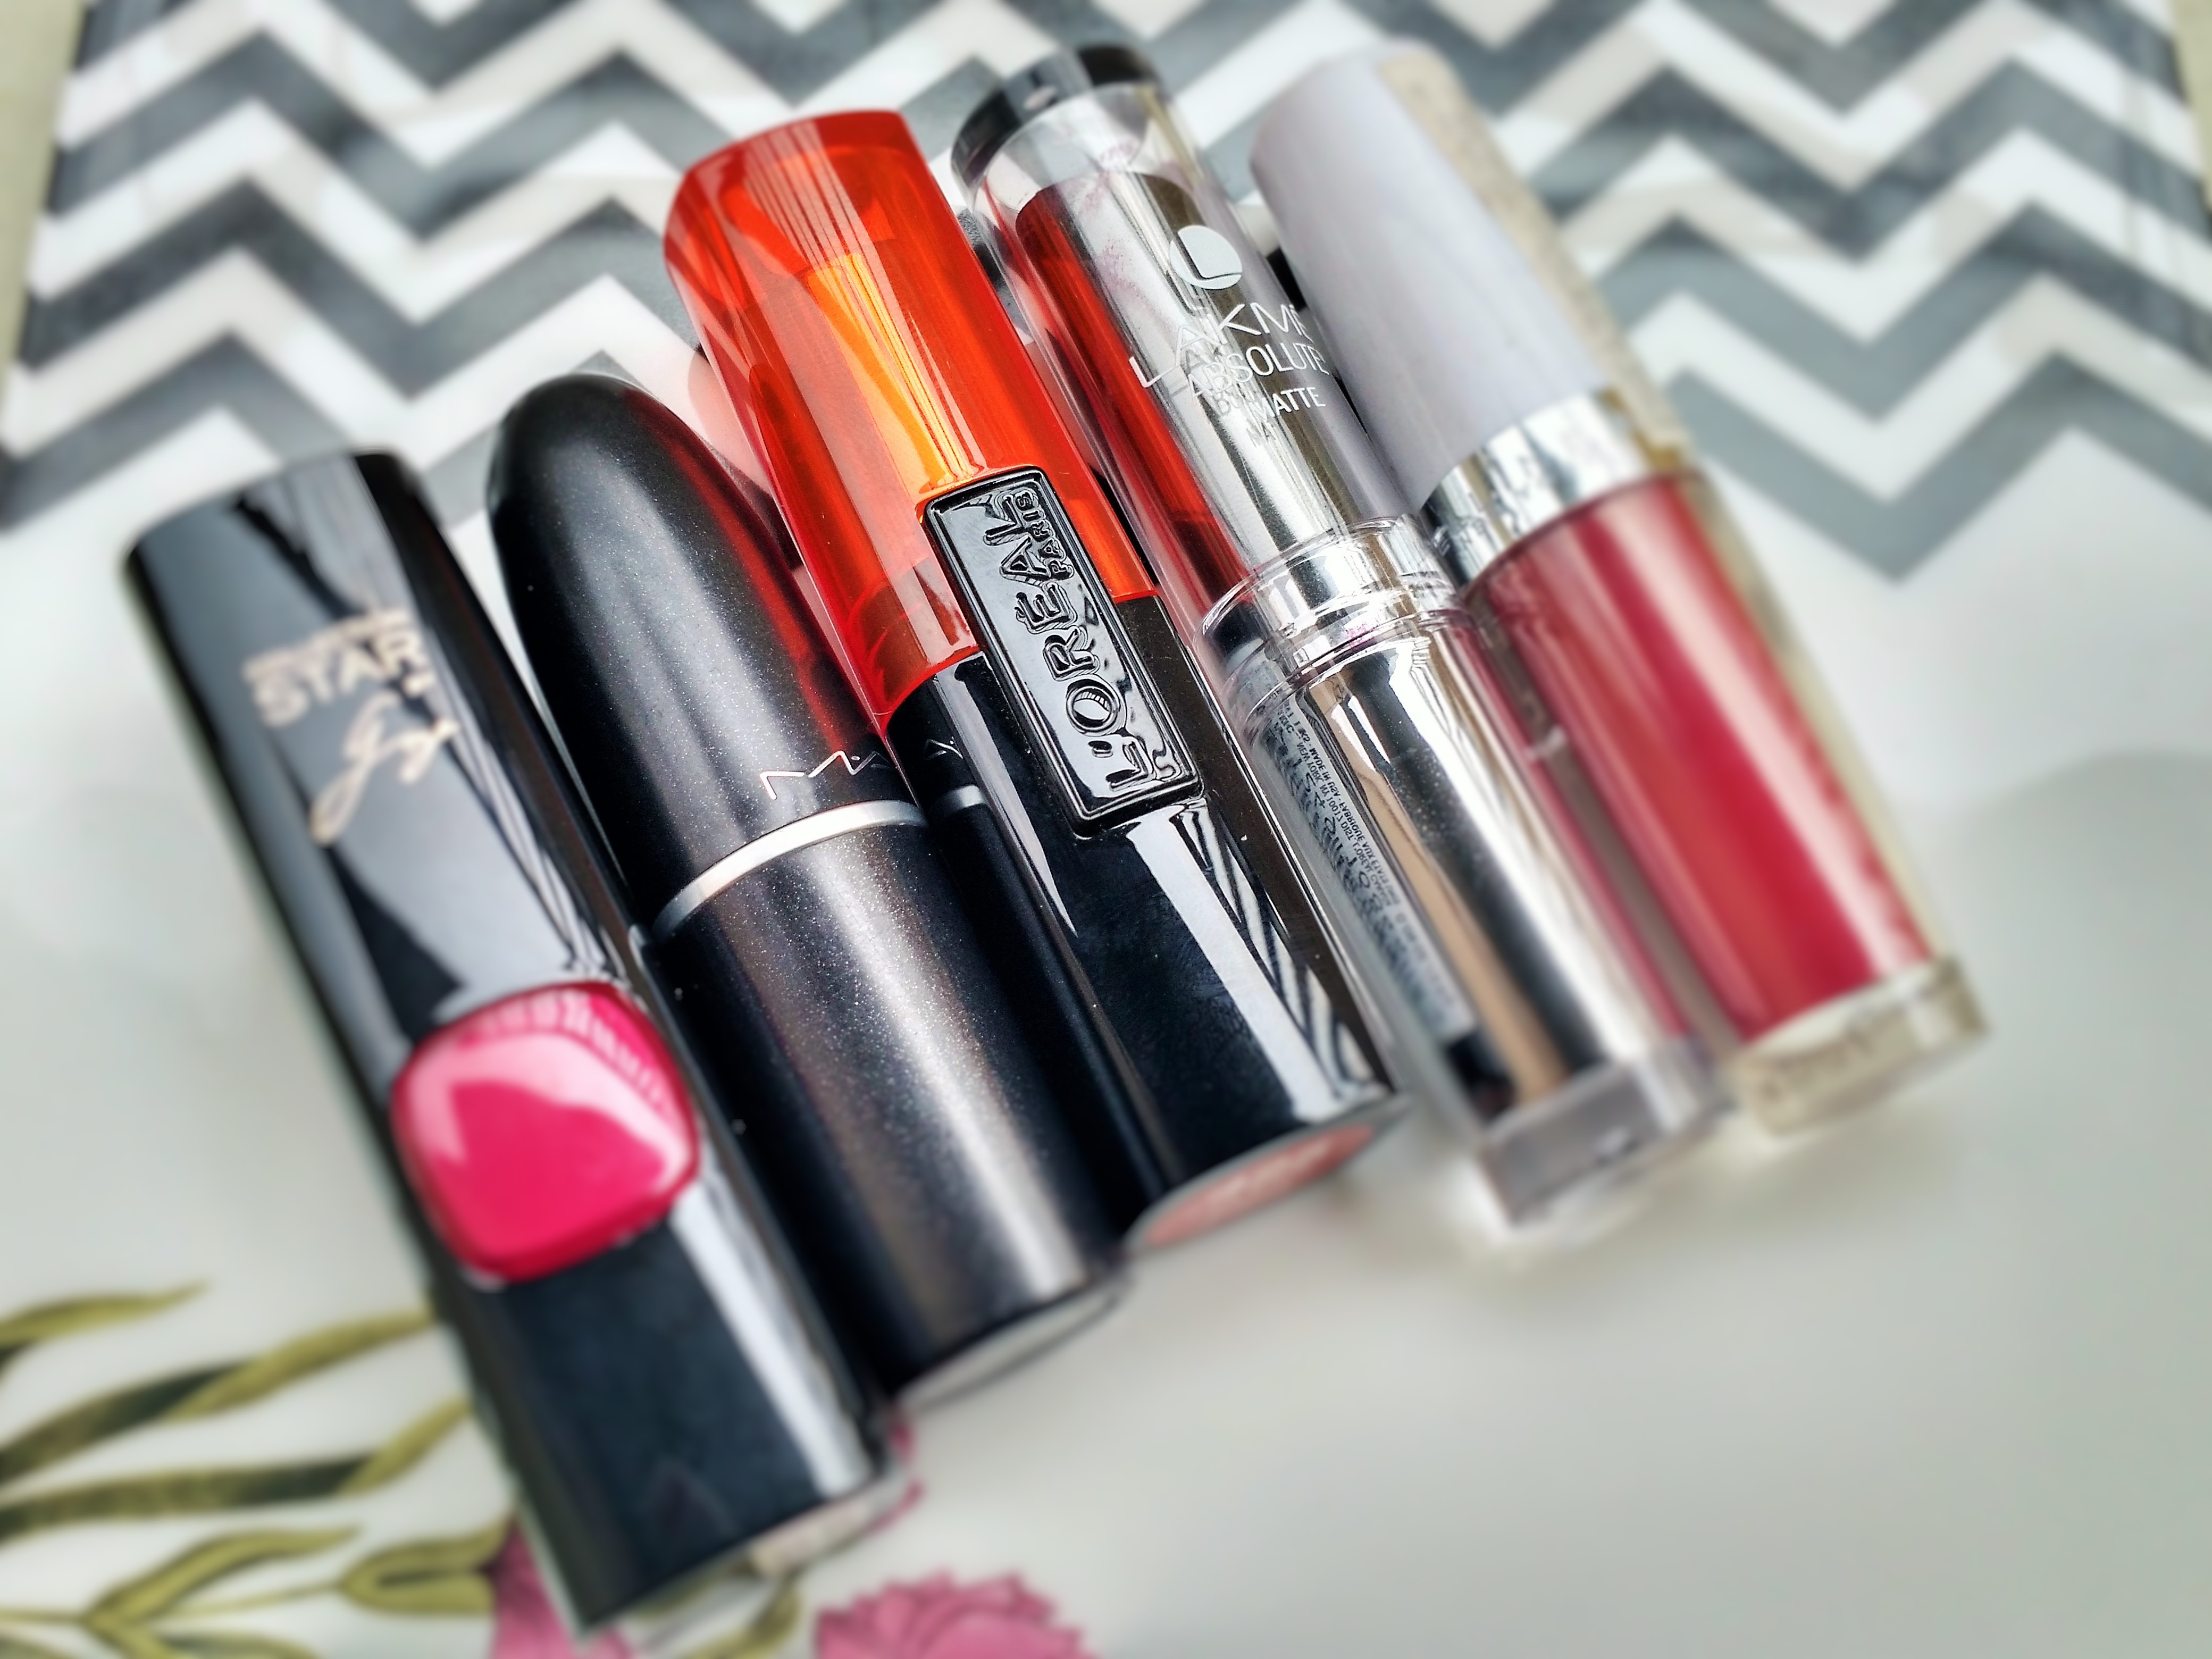 My current favorite lipsticks